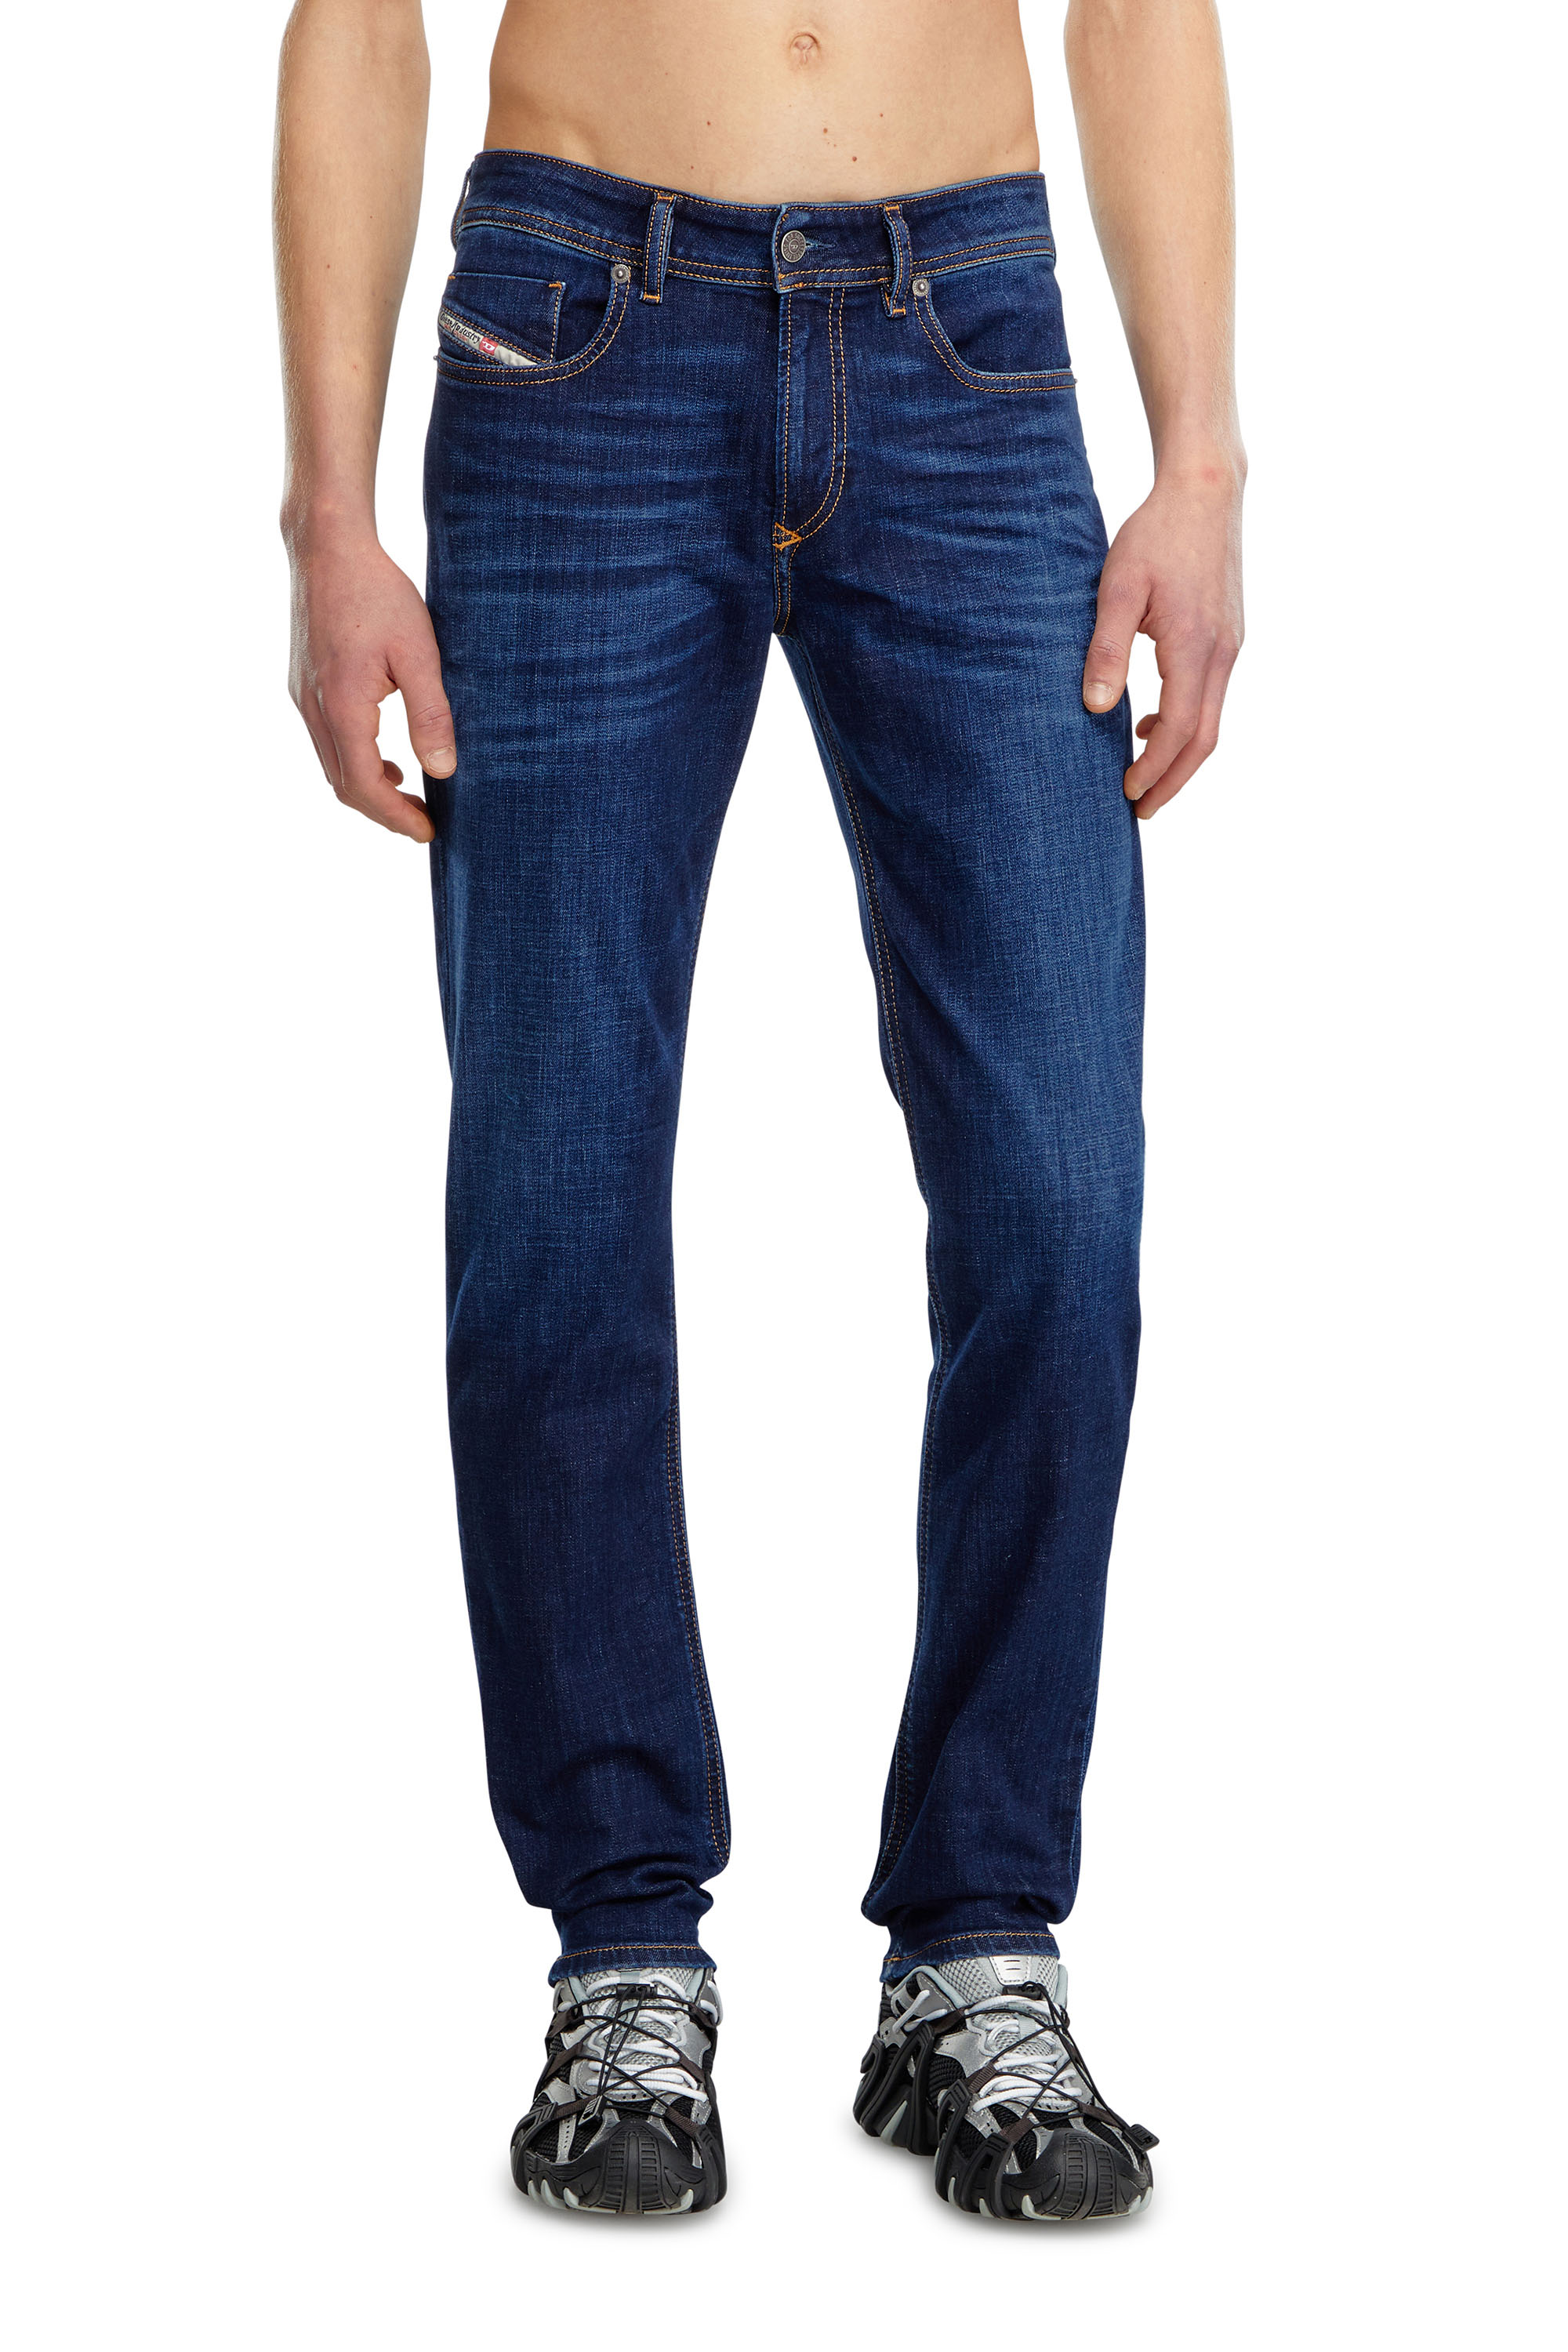 Diesel Men's Jeans: Straight, Tapered, Baggy, Bootcut, Skinny, Wide